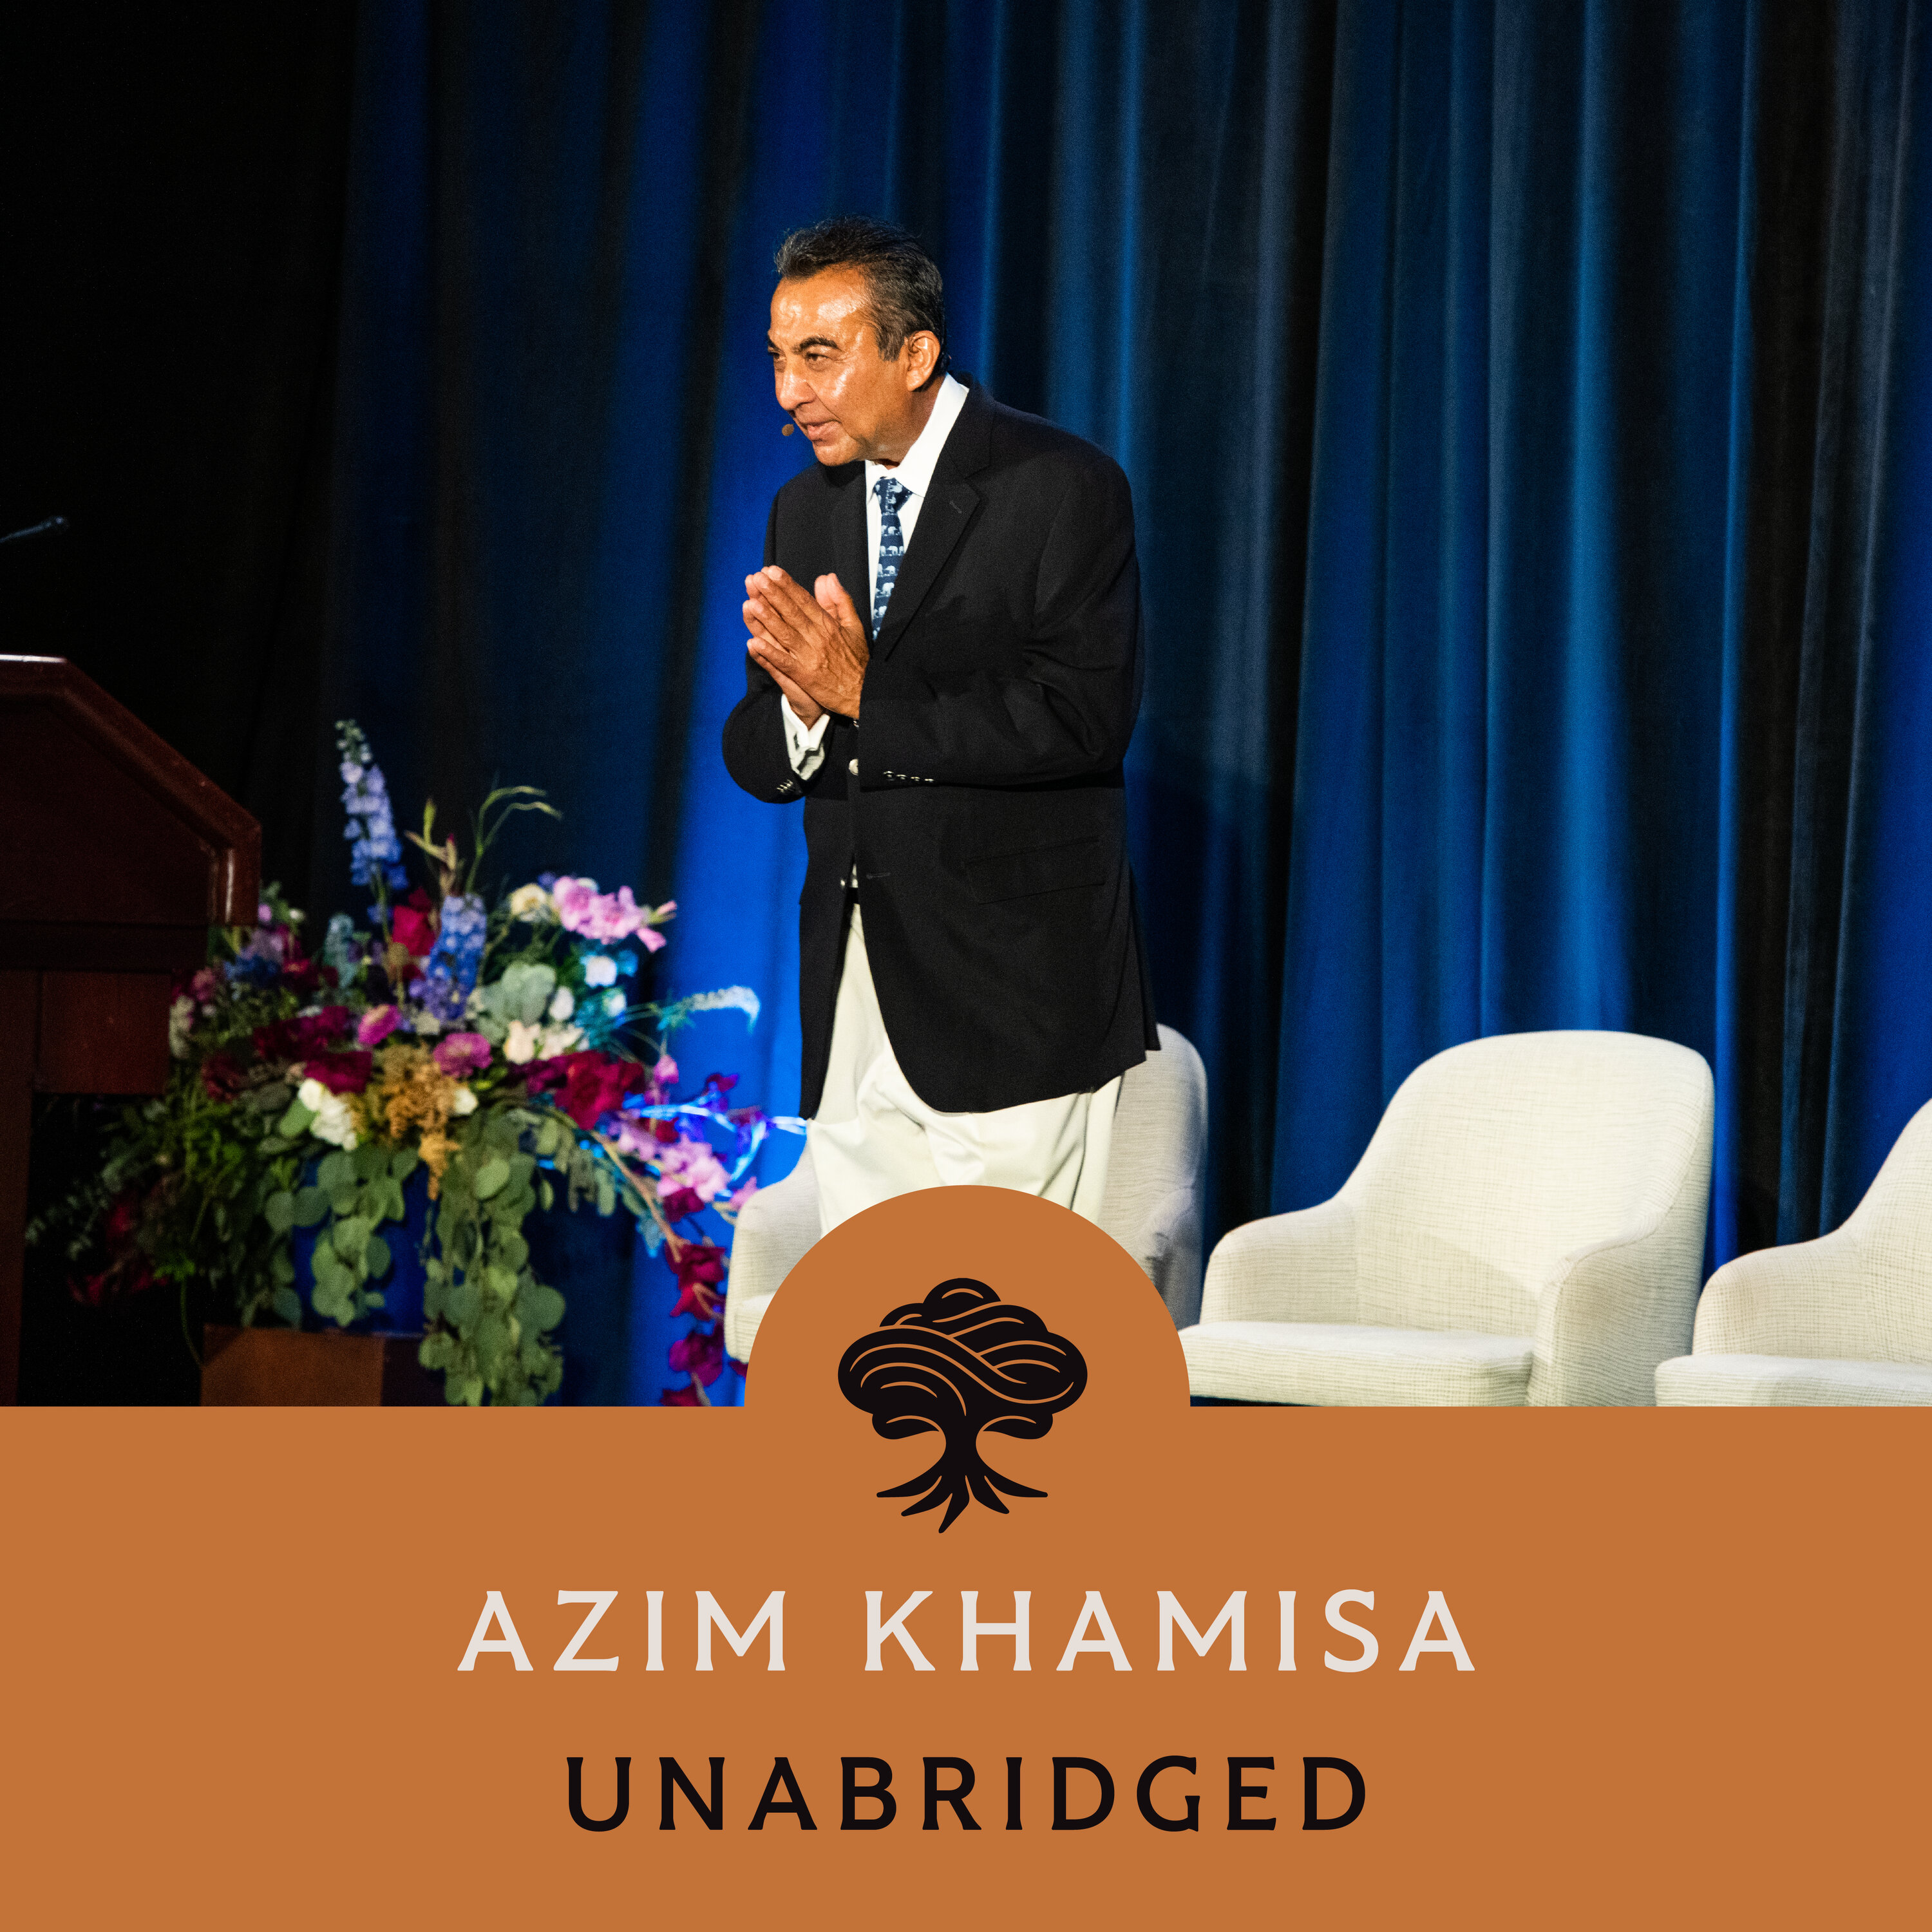 Thumbnail for "107: Unabridged Interview: Azim Khamisa".